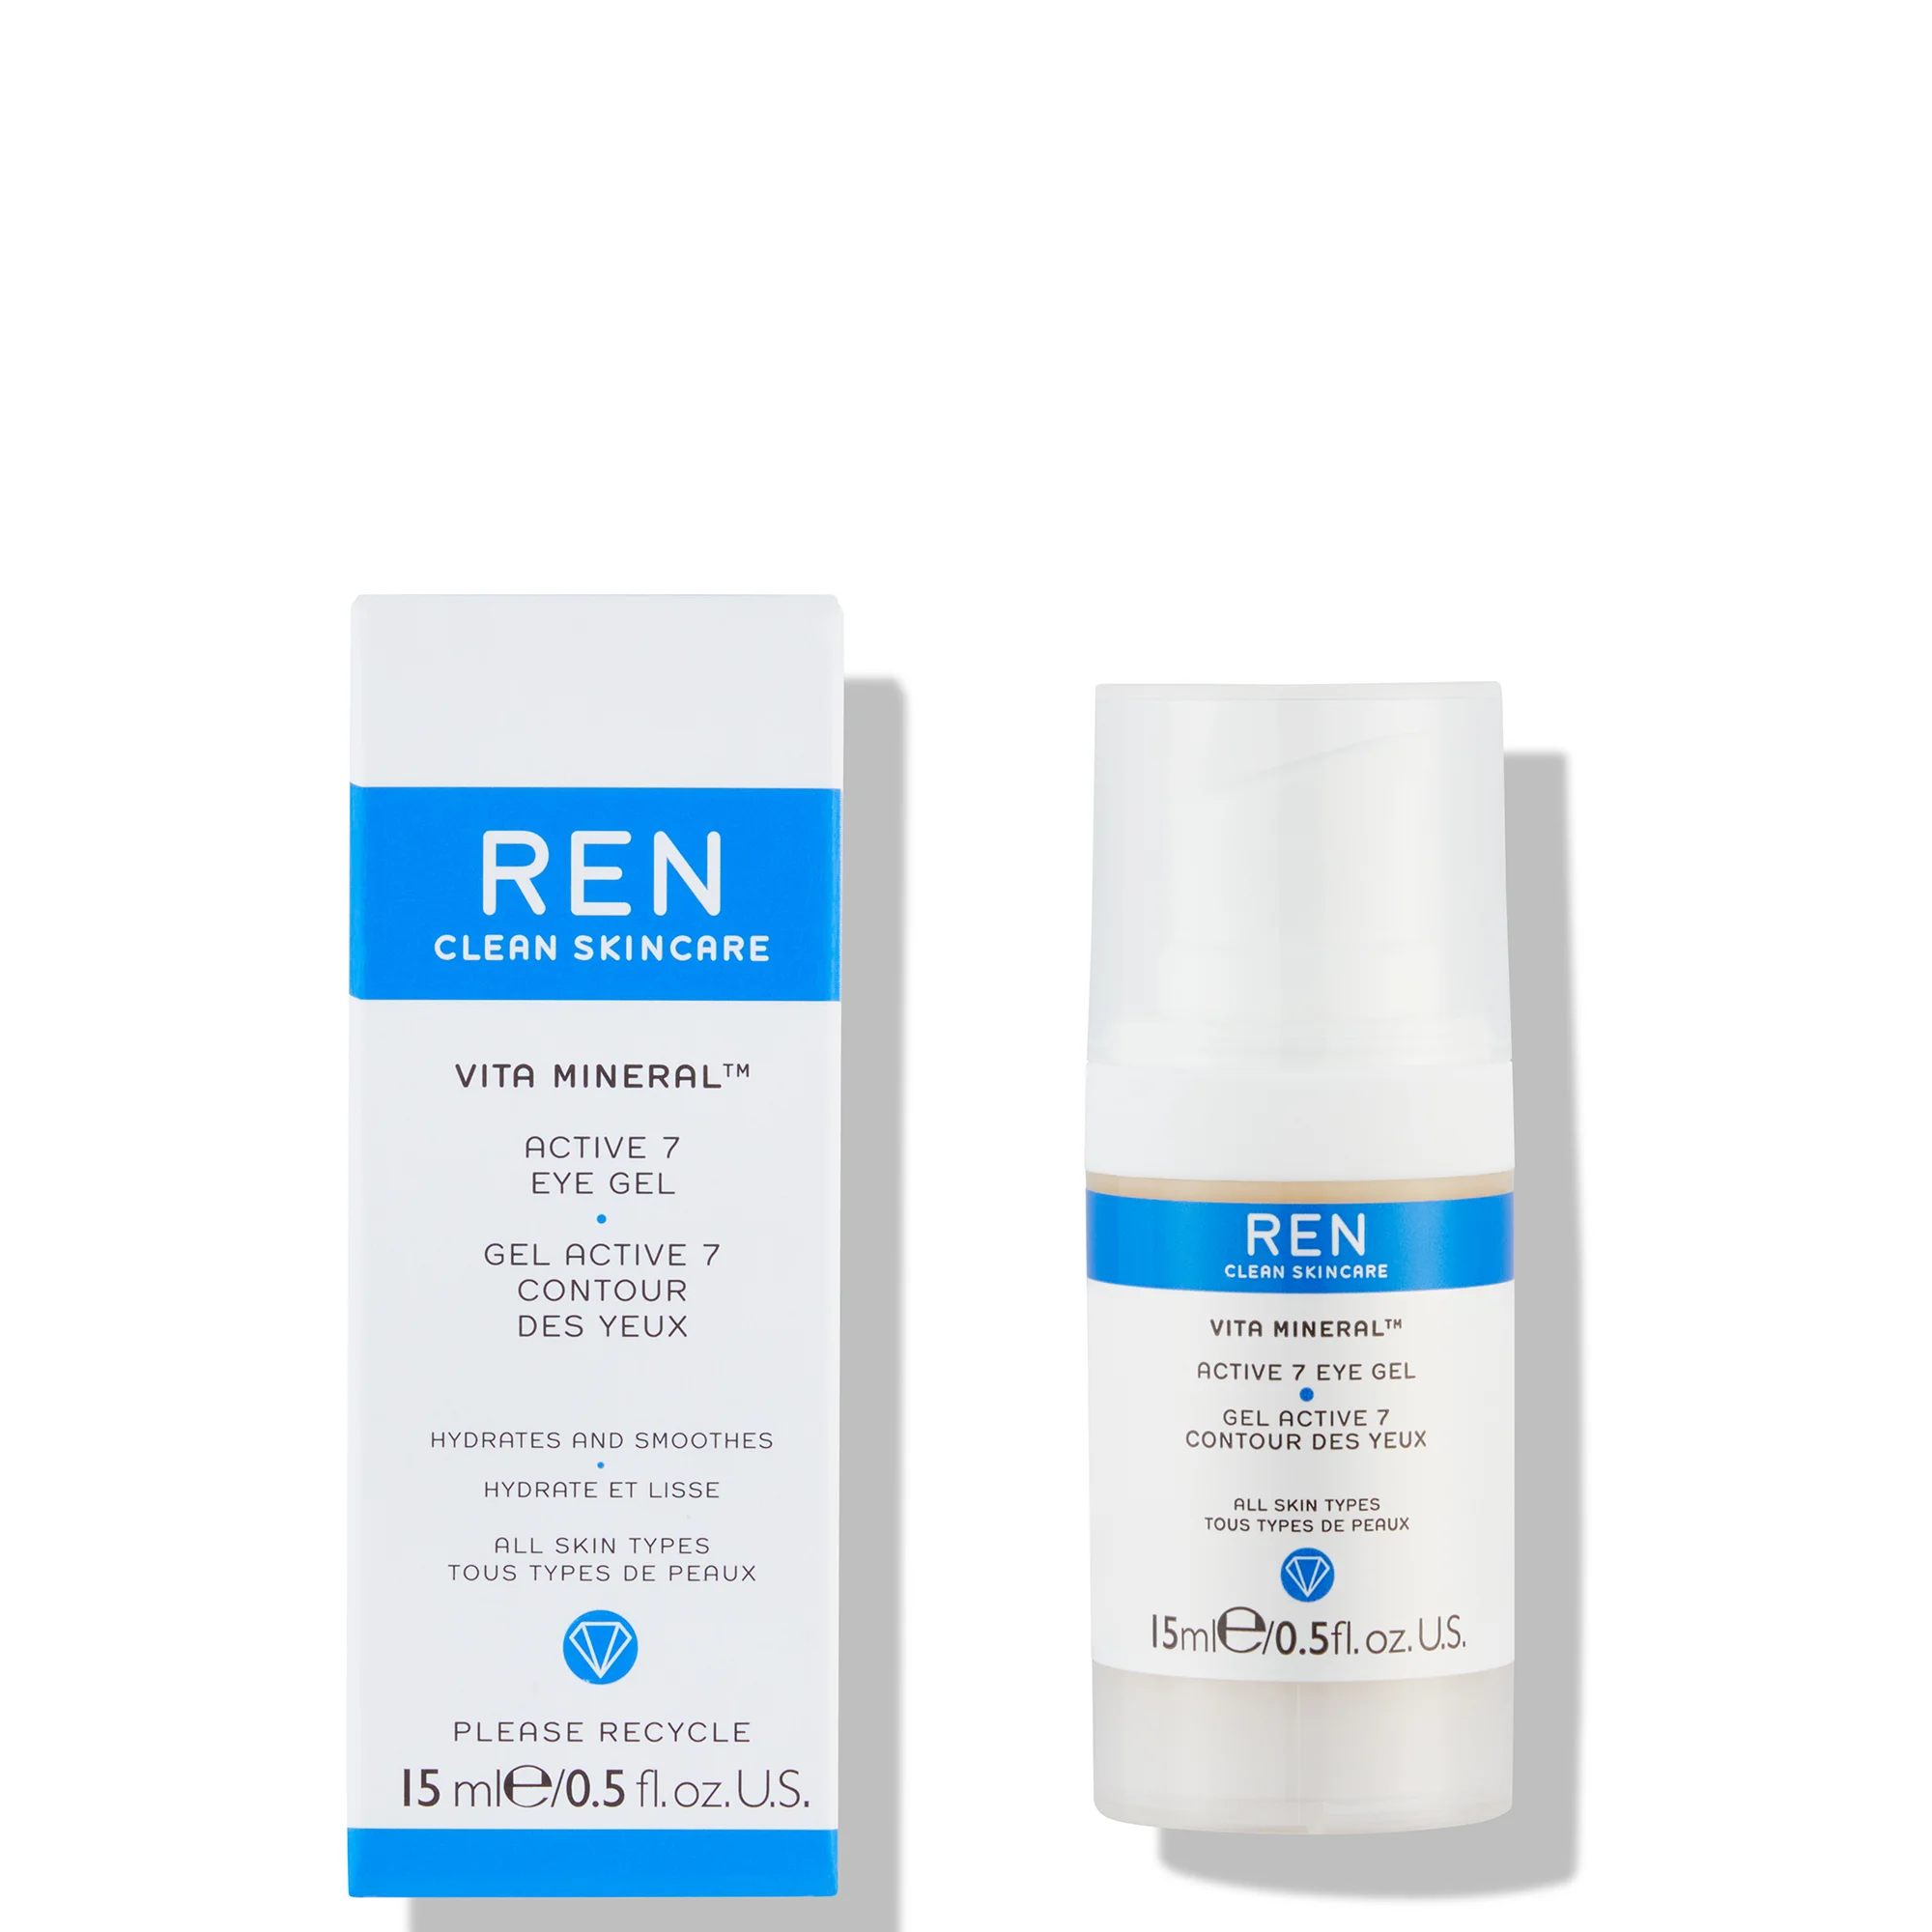 REN Clean Skincare Vita Mineral Active 7 Eye Gel 15ml Image 1